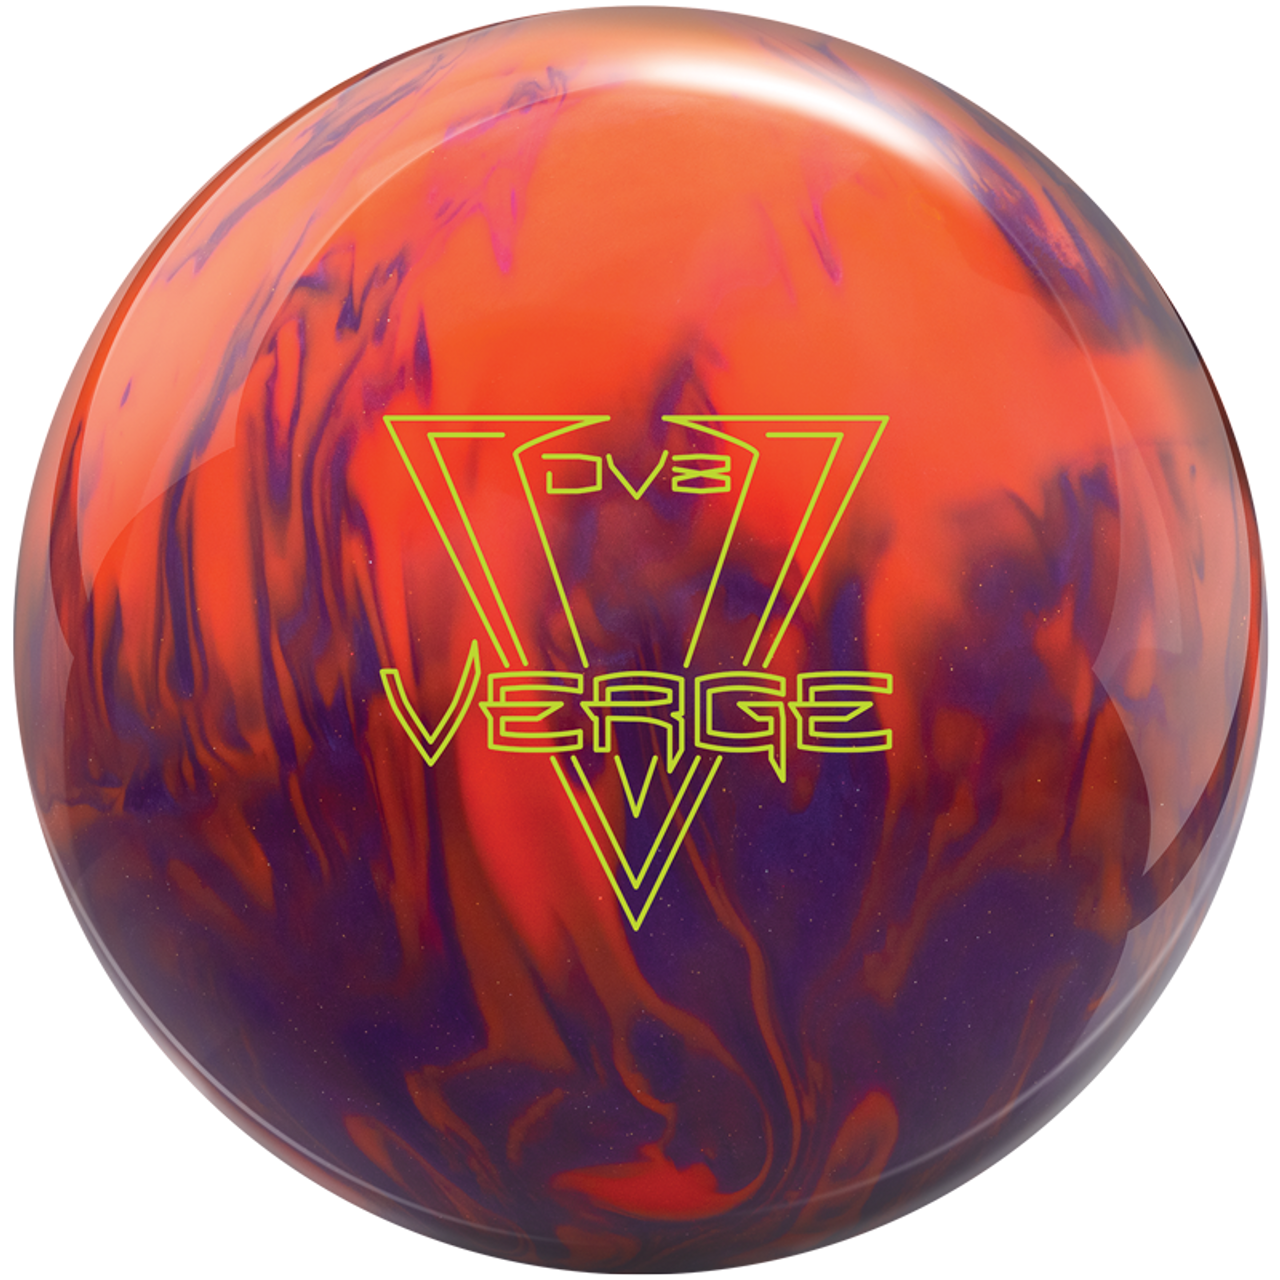 DV8 Verge Hybrid Bowling Ball